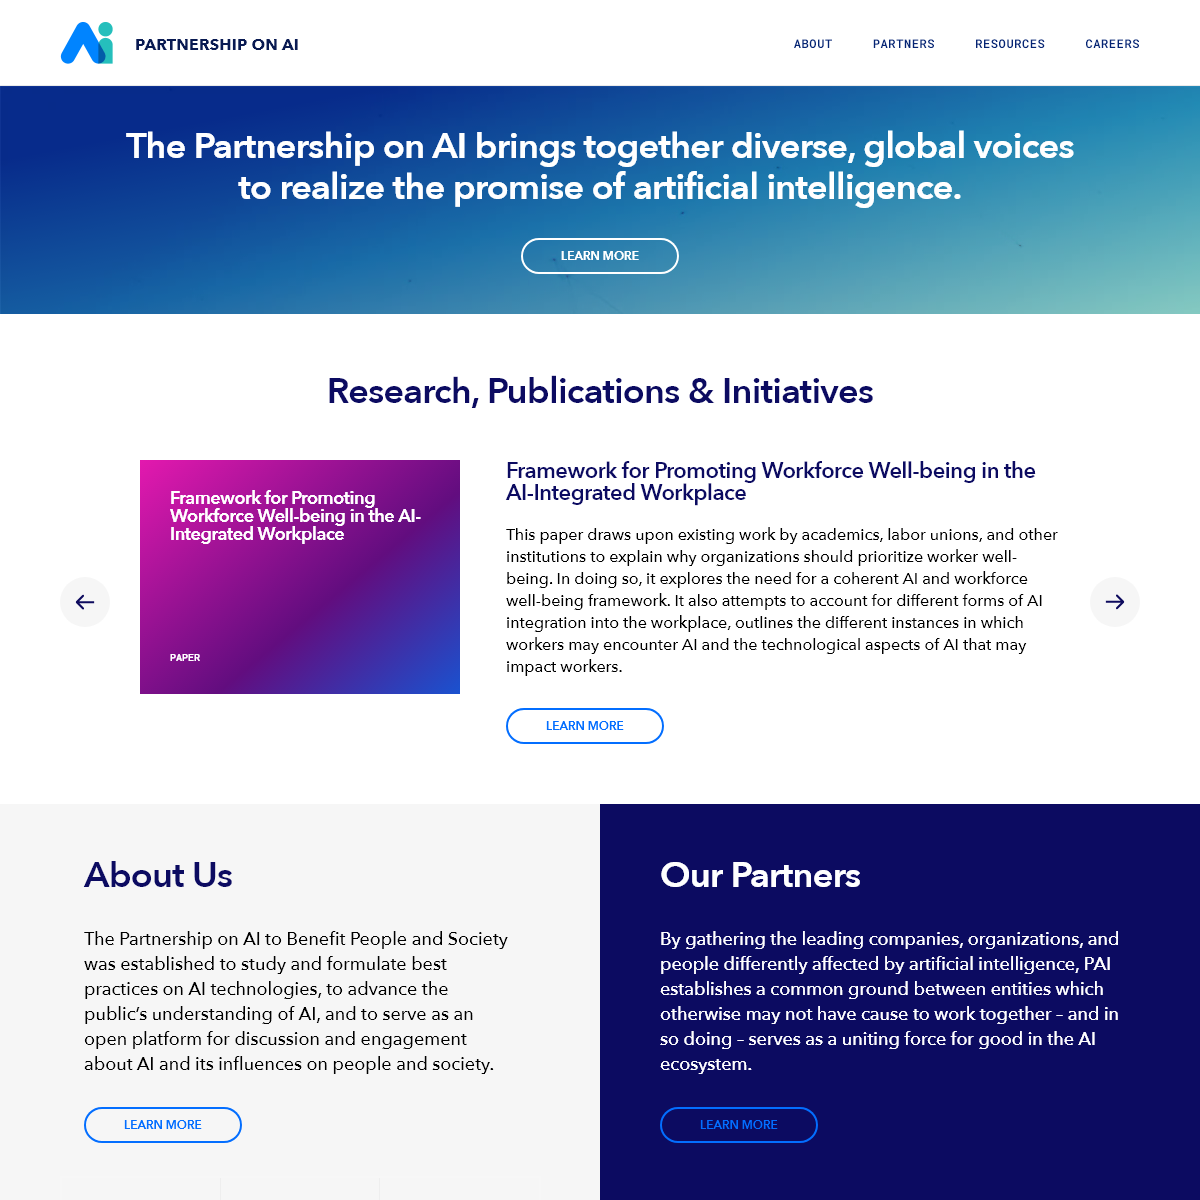 The Partnership on AI